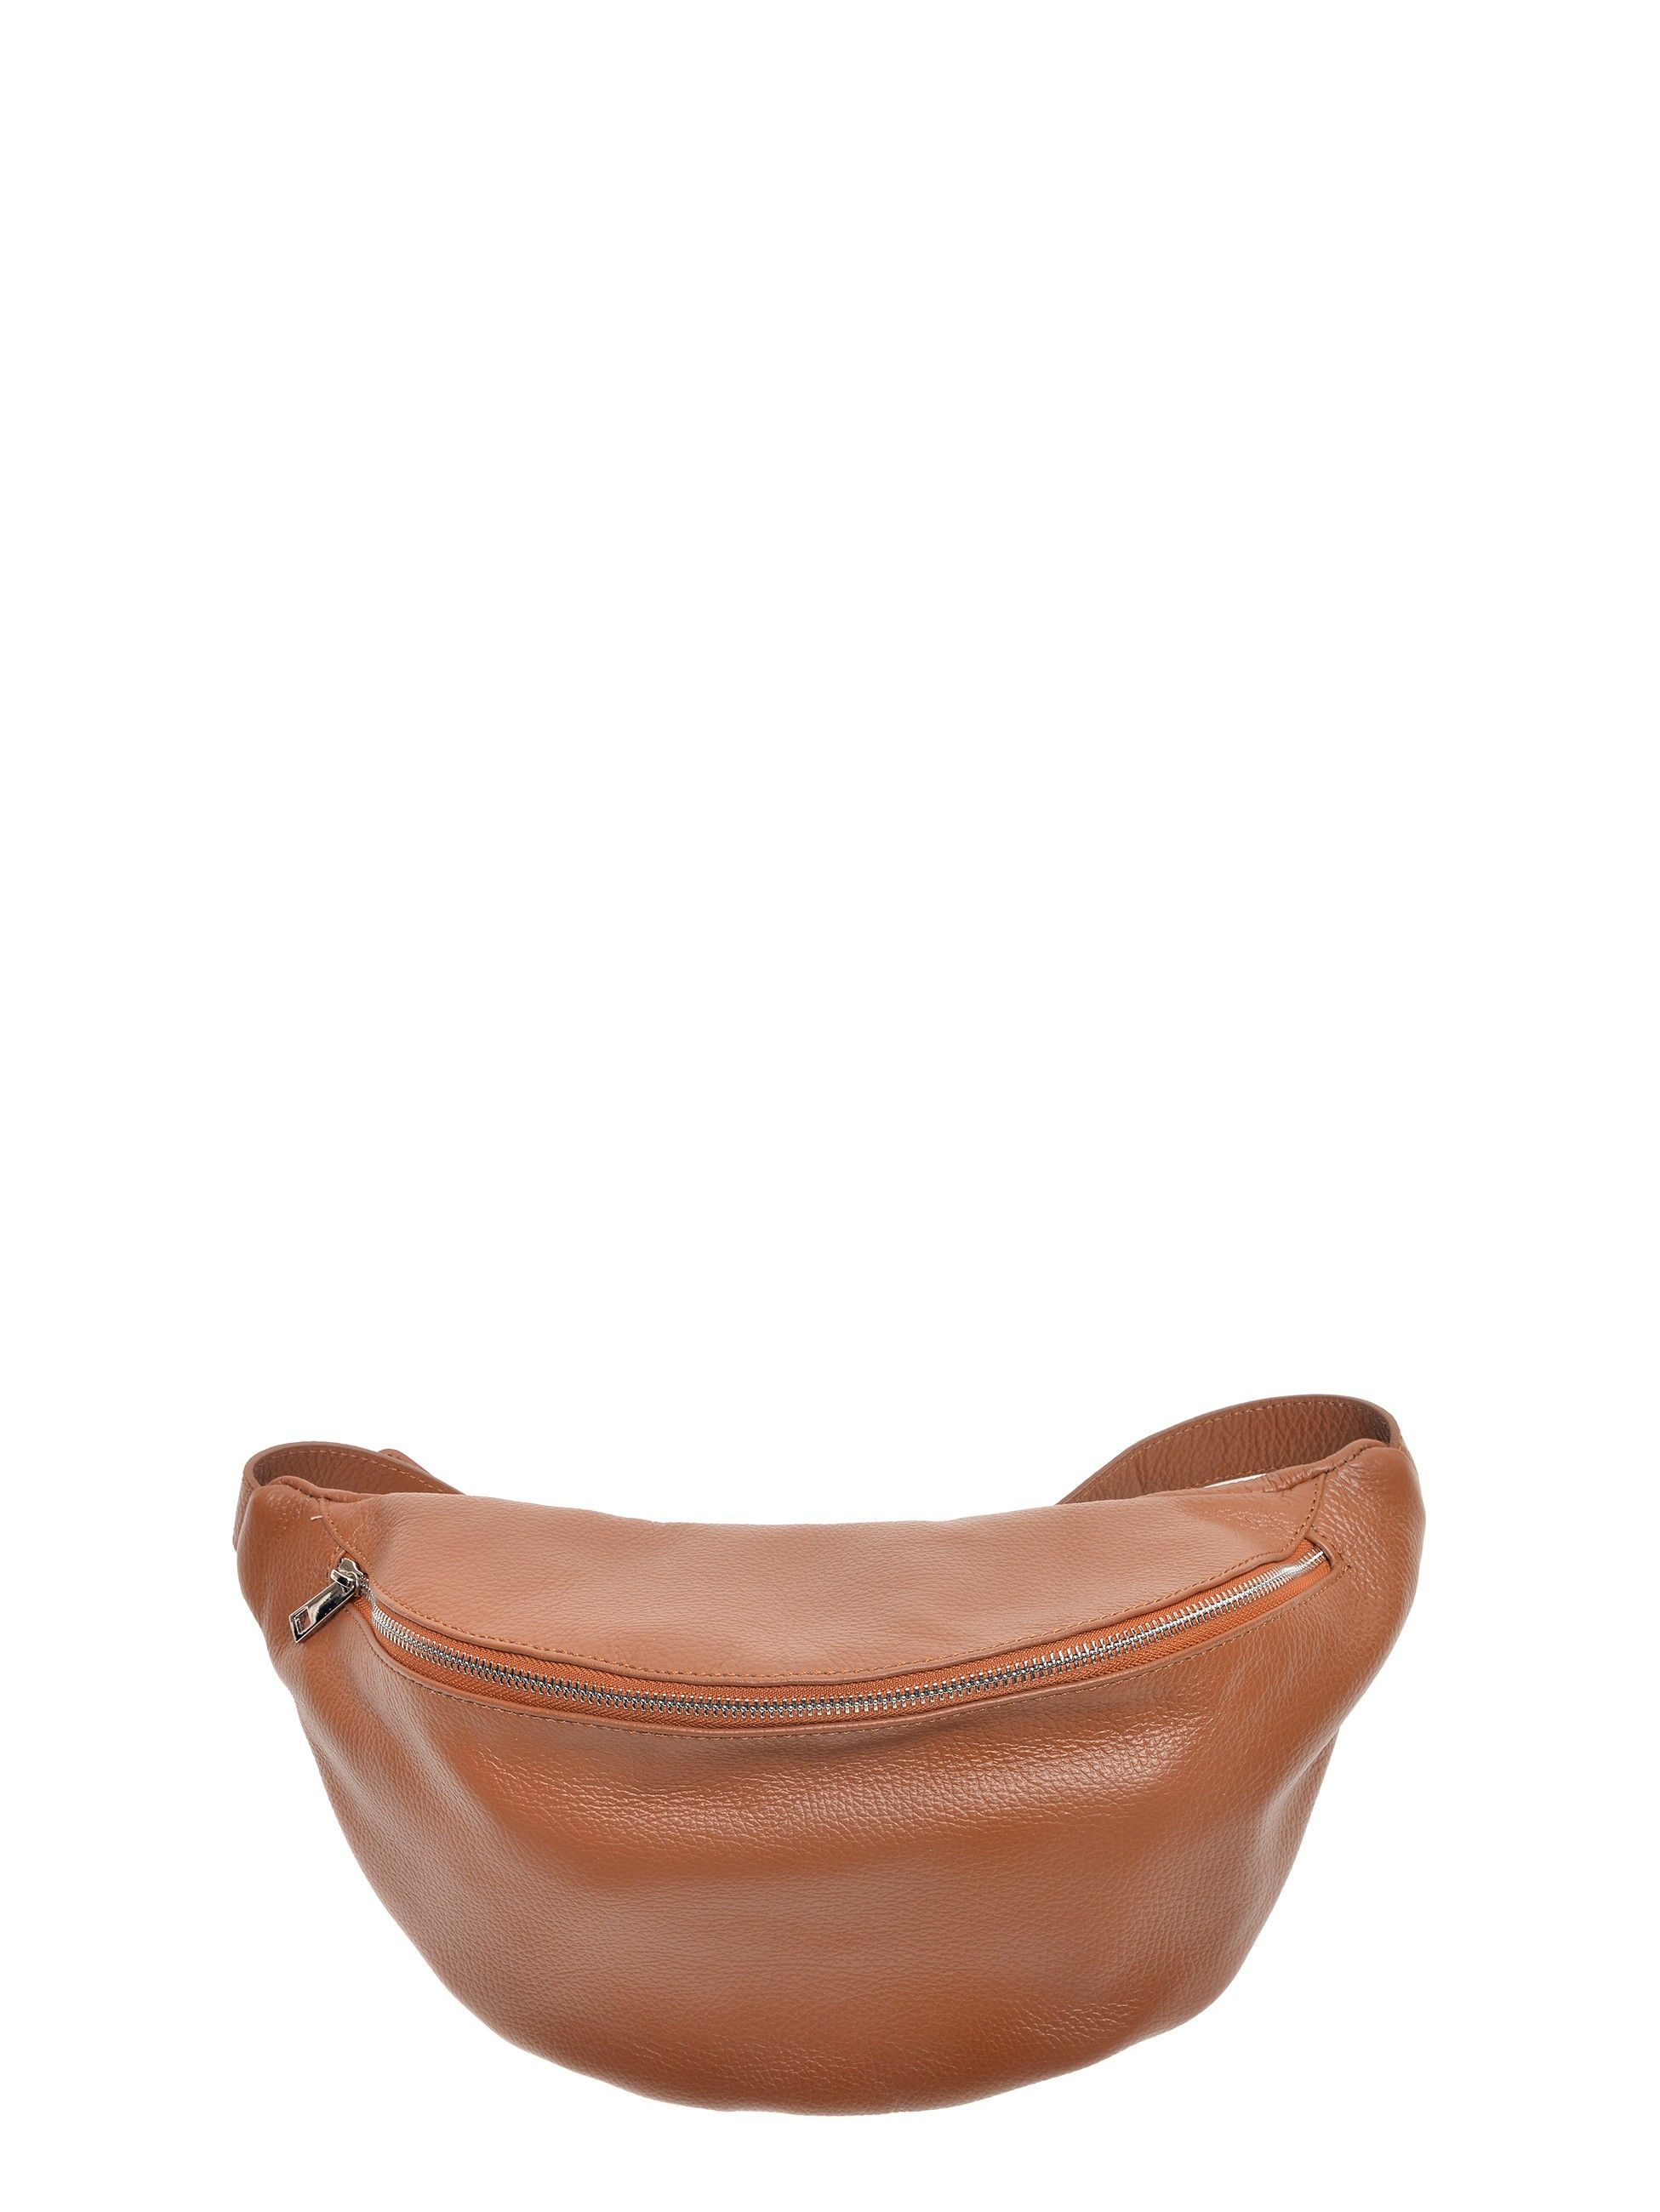 Waist Bag
100% cow leather
Front zip closure
Inner zipped compartment
Dimensions (L): 19x34 x / cm
Handle: /
Shoulder strap: 97 cm adjustable